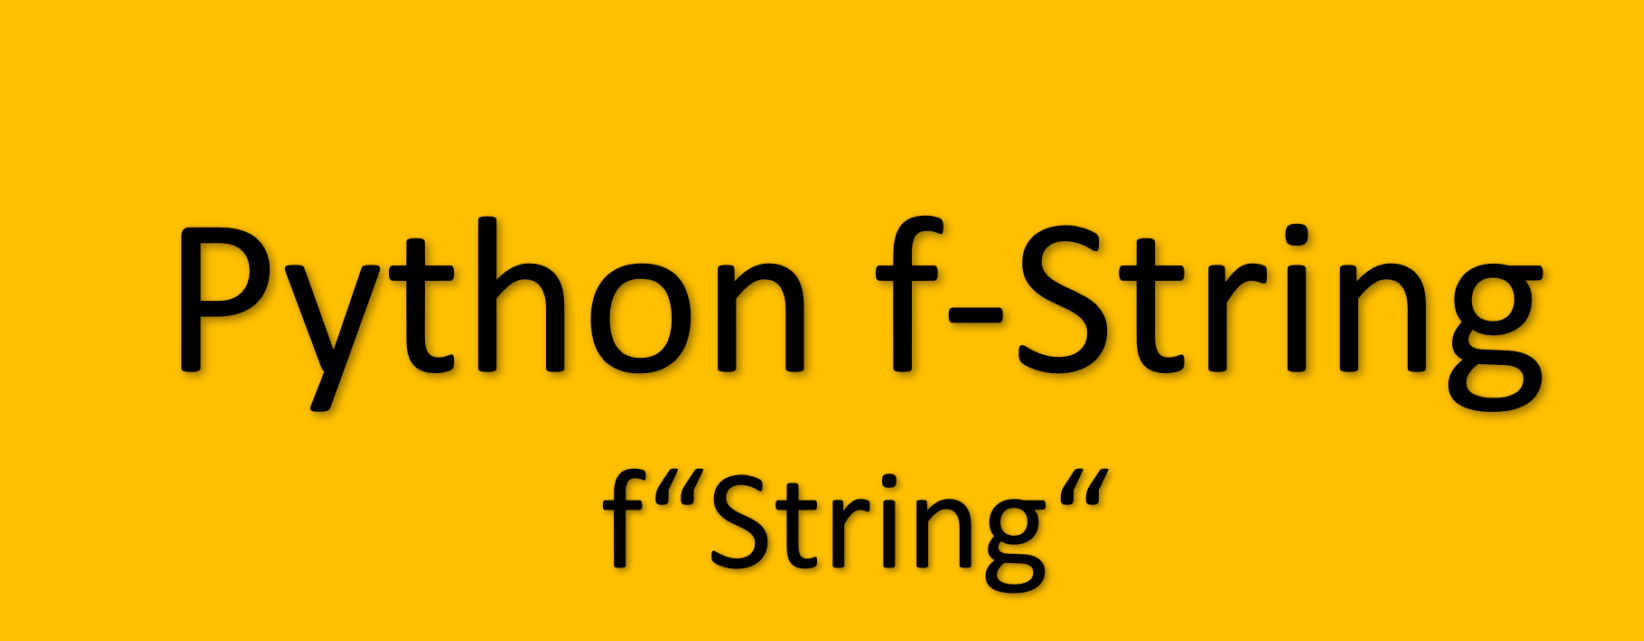 f-strings in Python